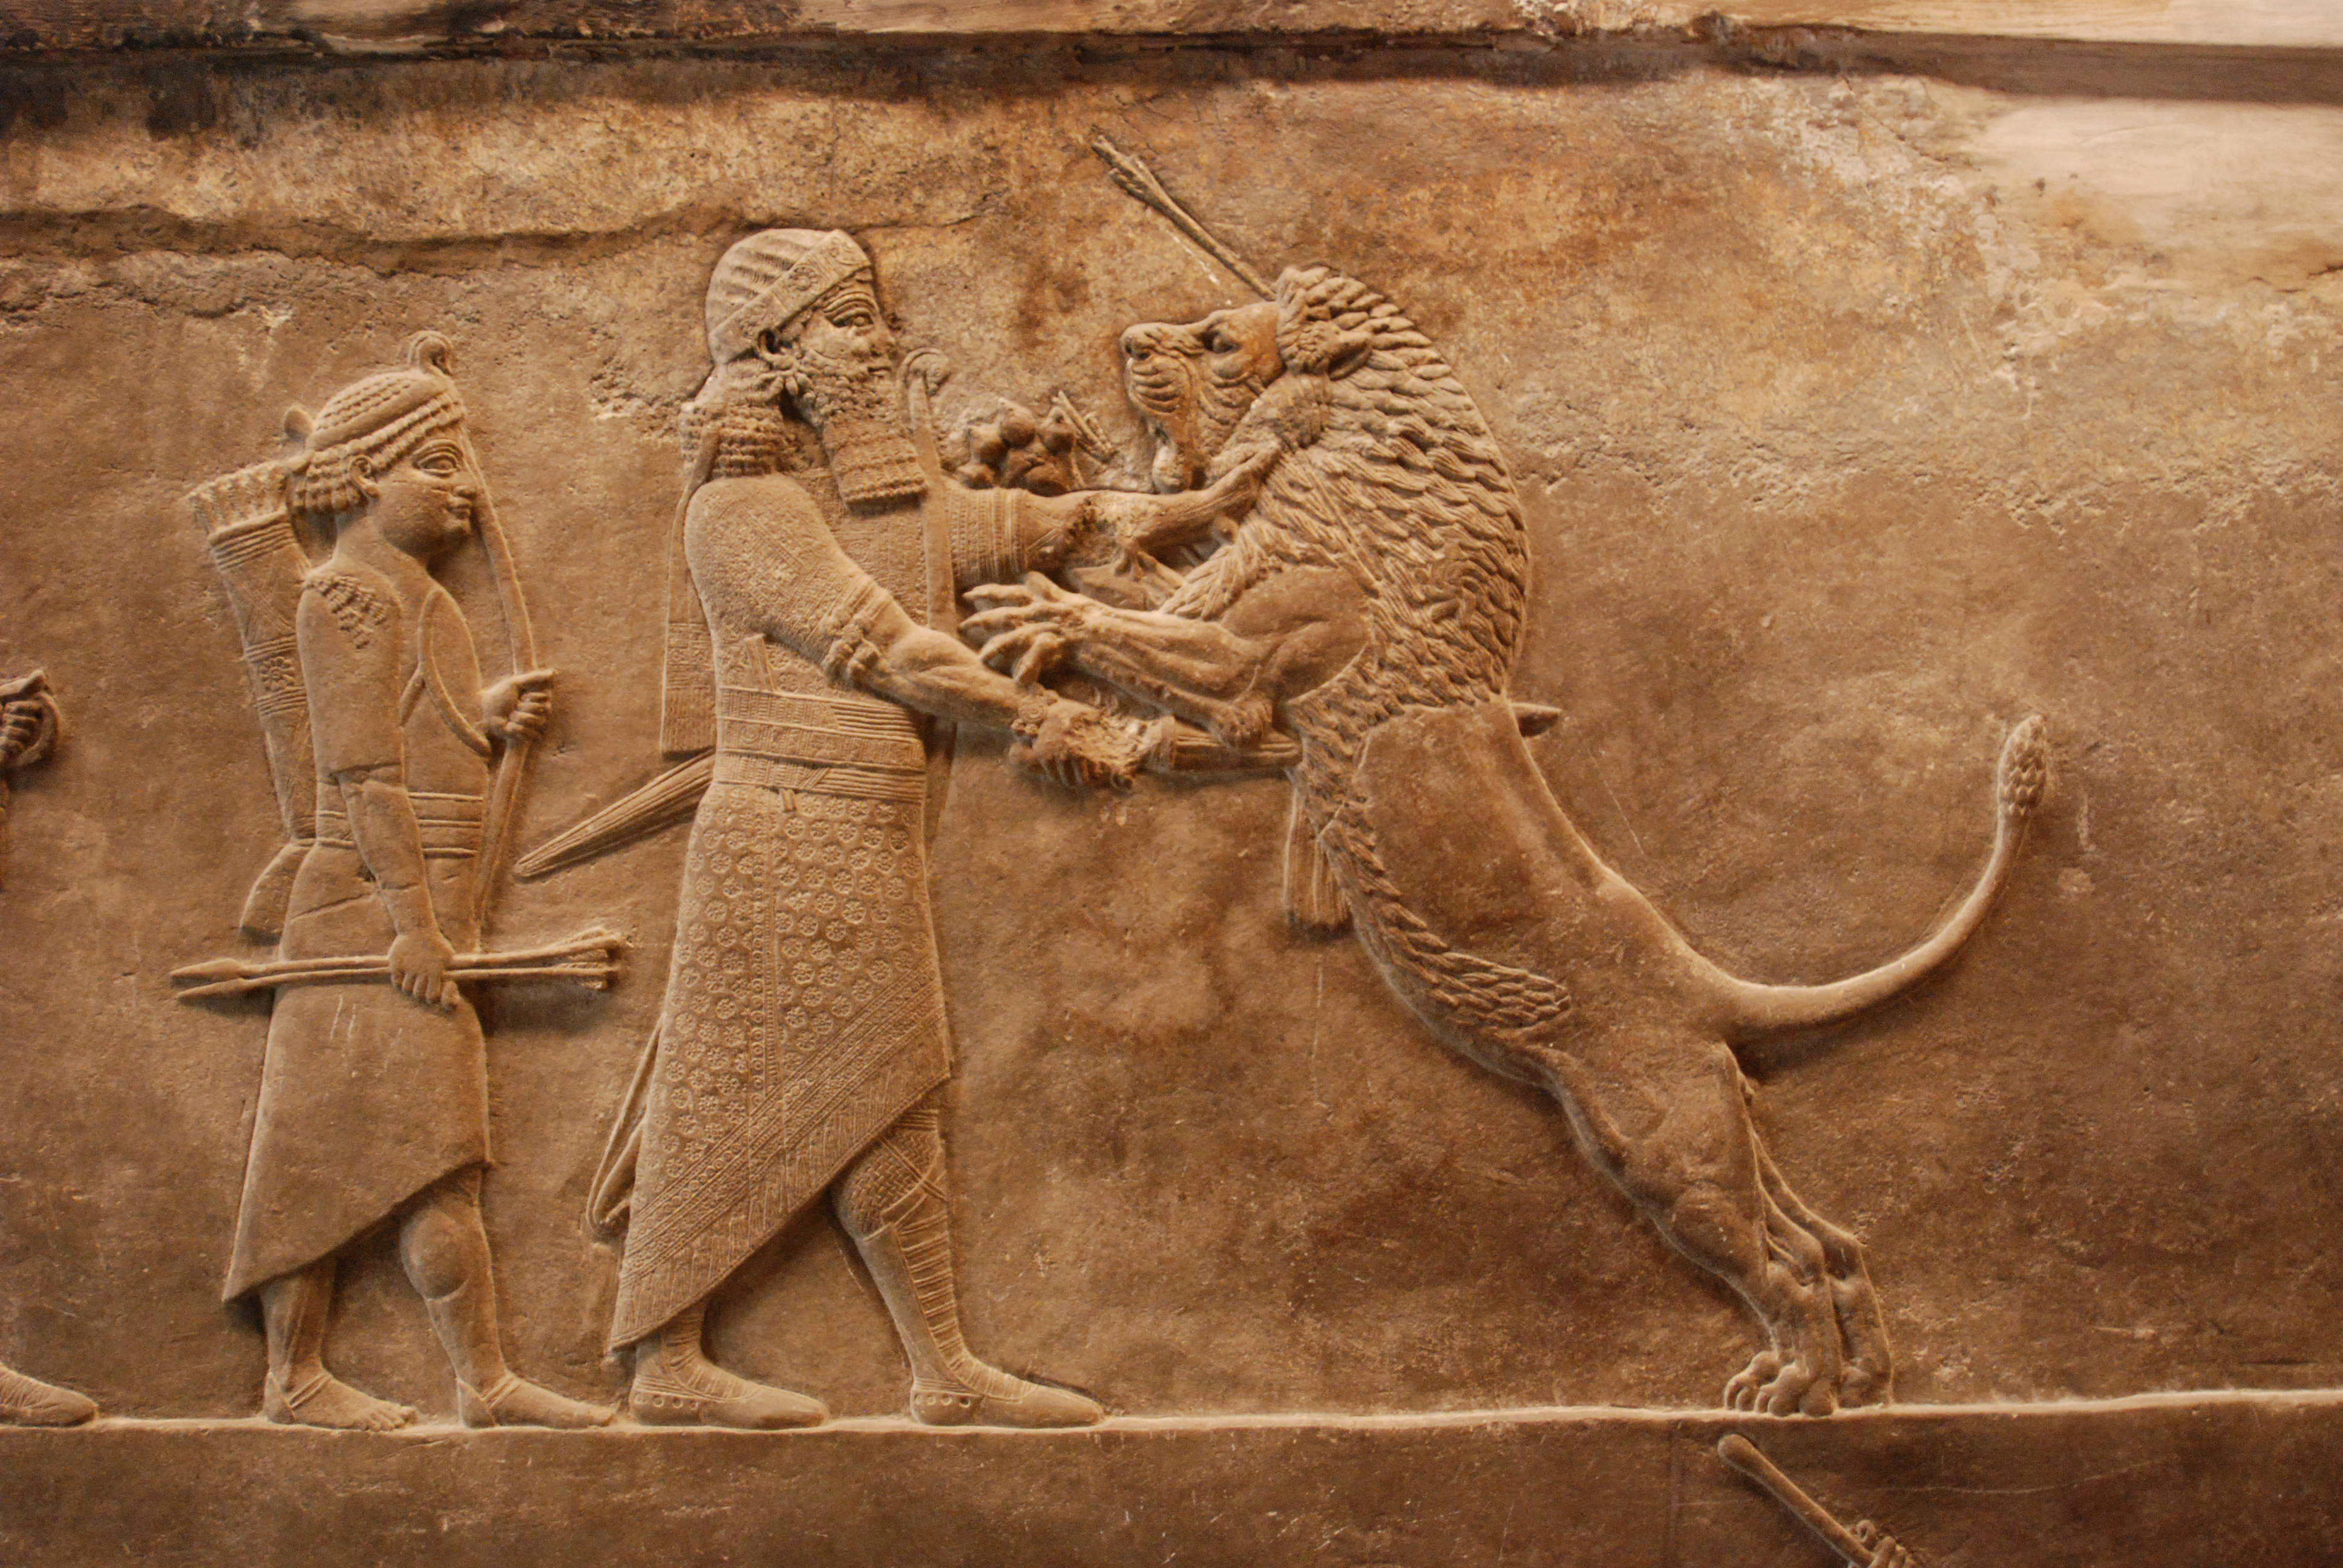 Assyria.jpg